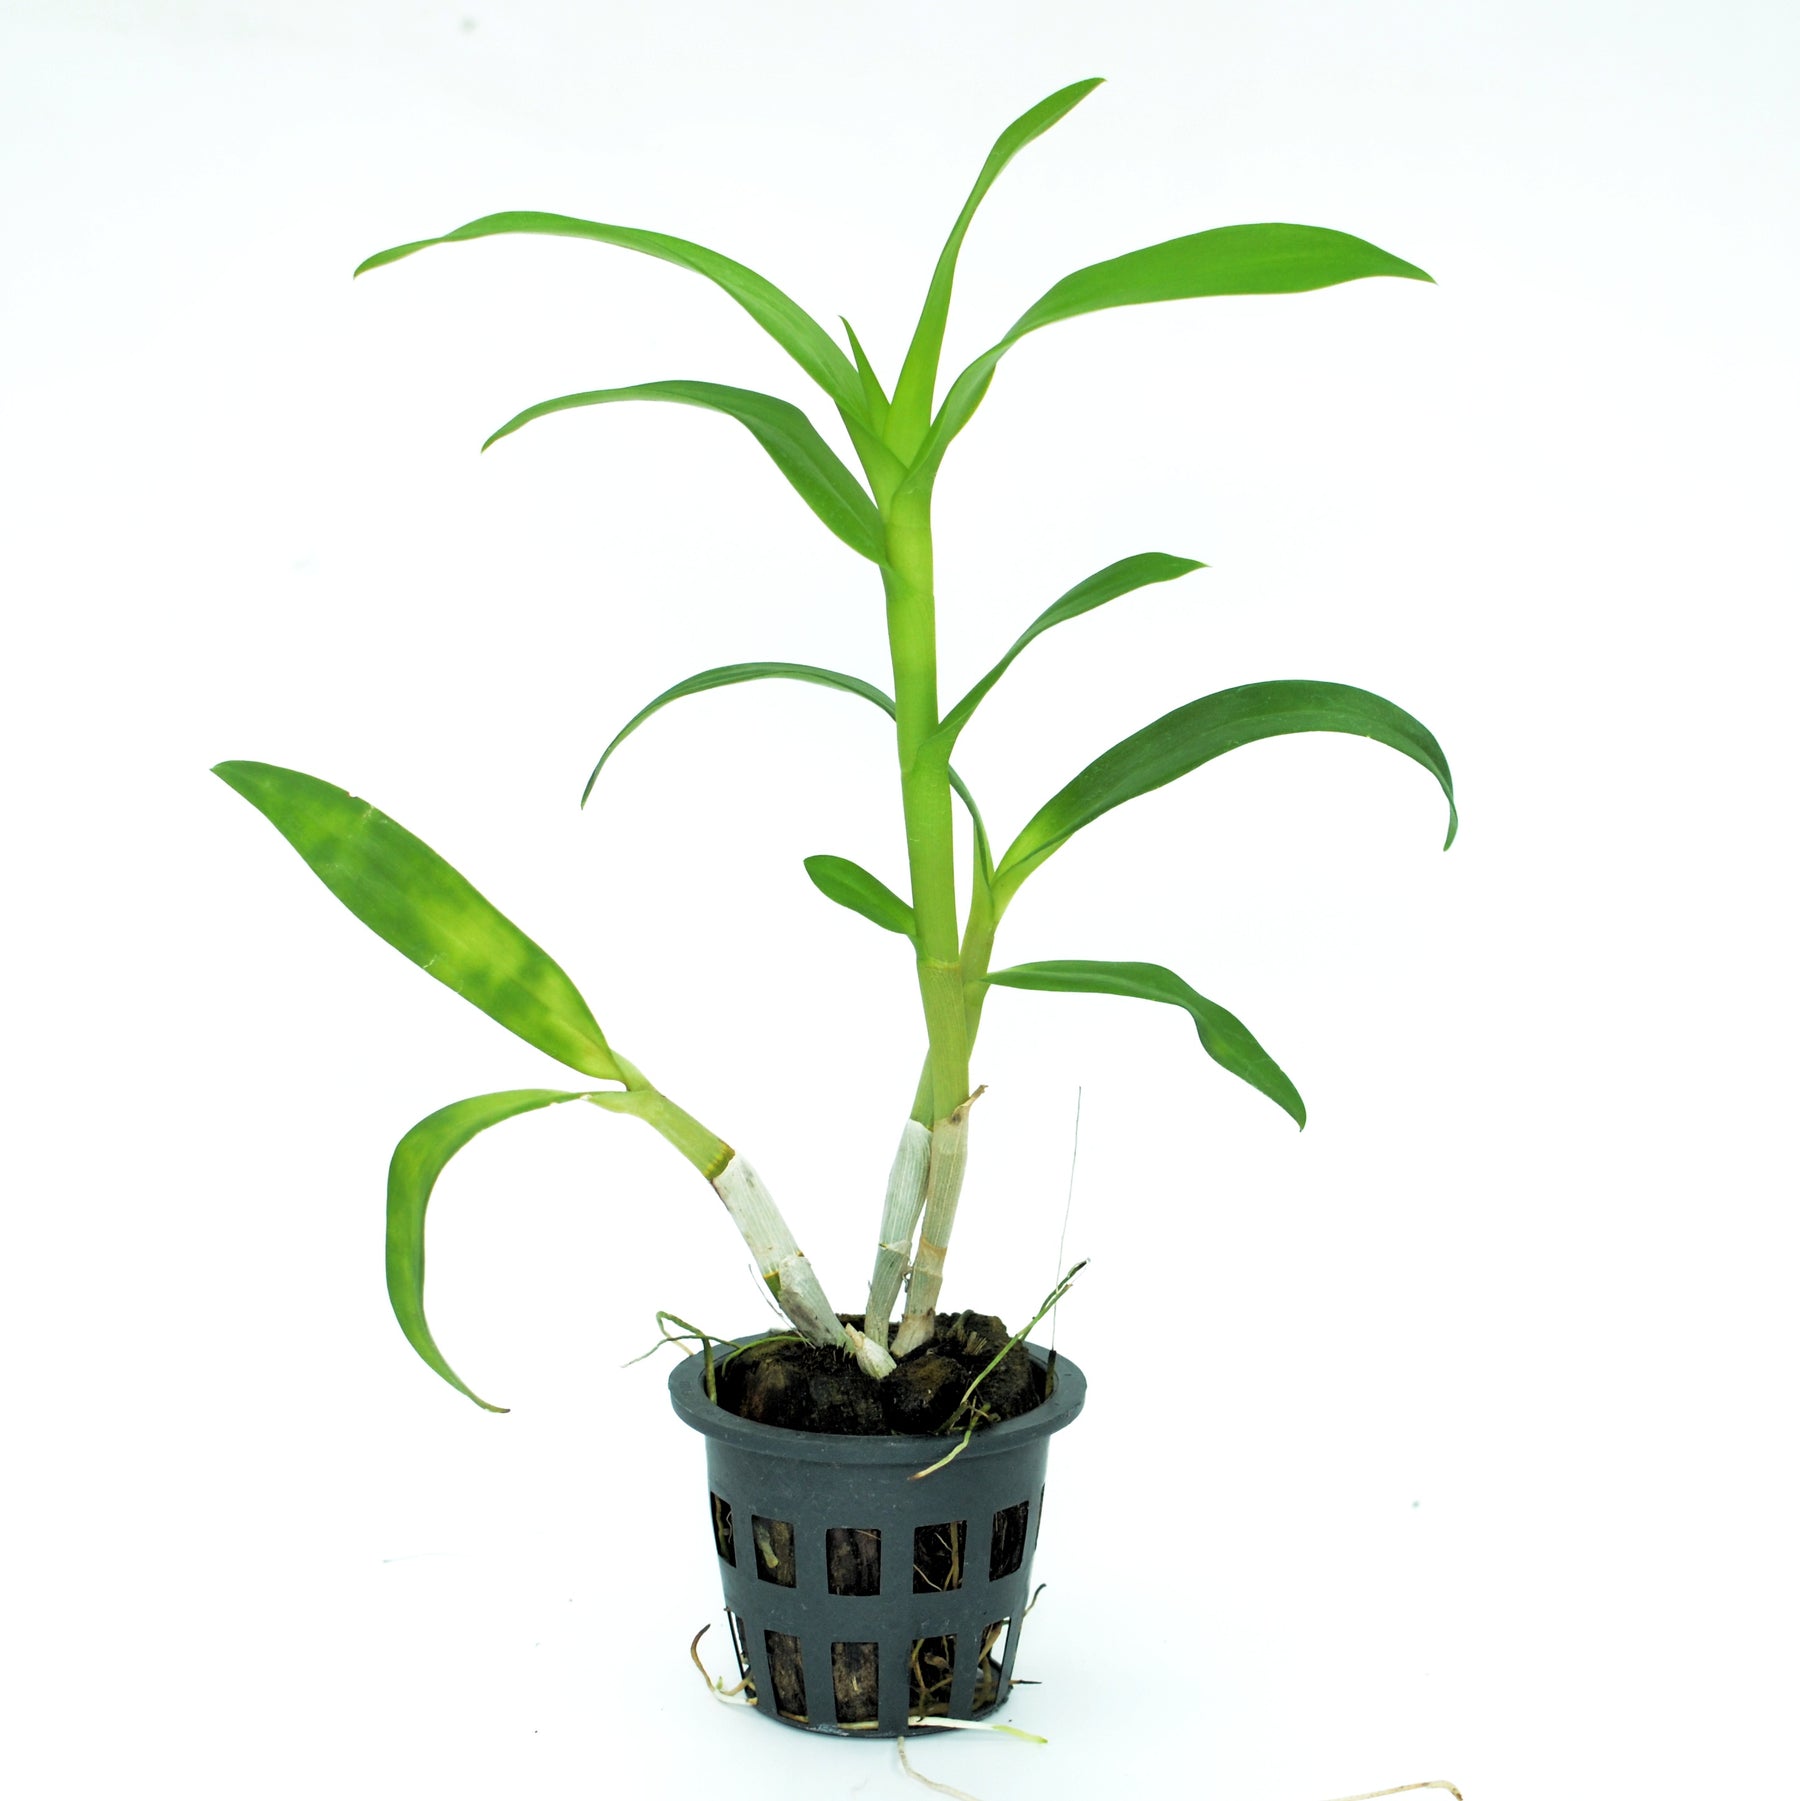 Dendrobium Shavin White Orchid Live Plant - Elegant White Blooms for Your Indoor Garden